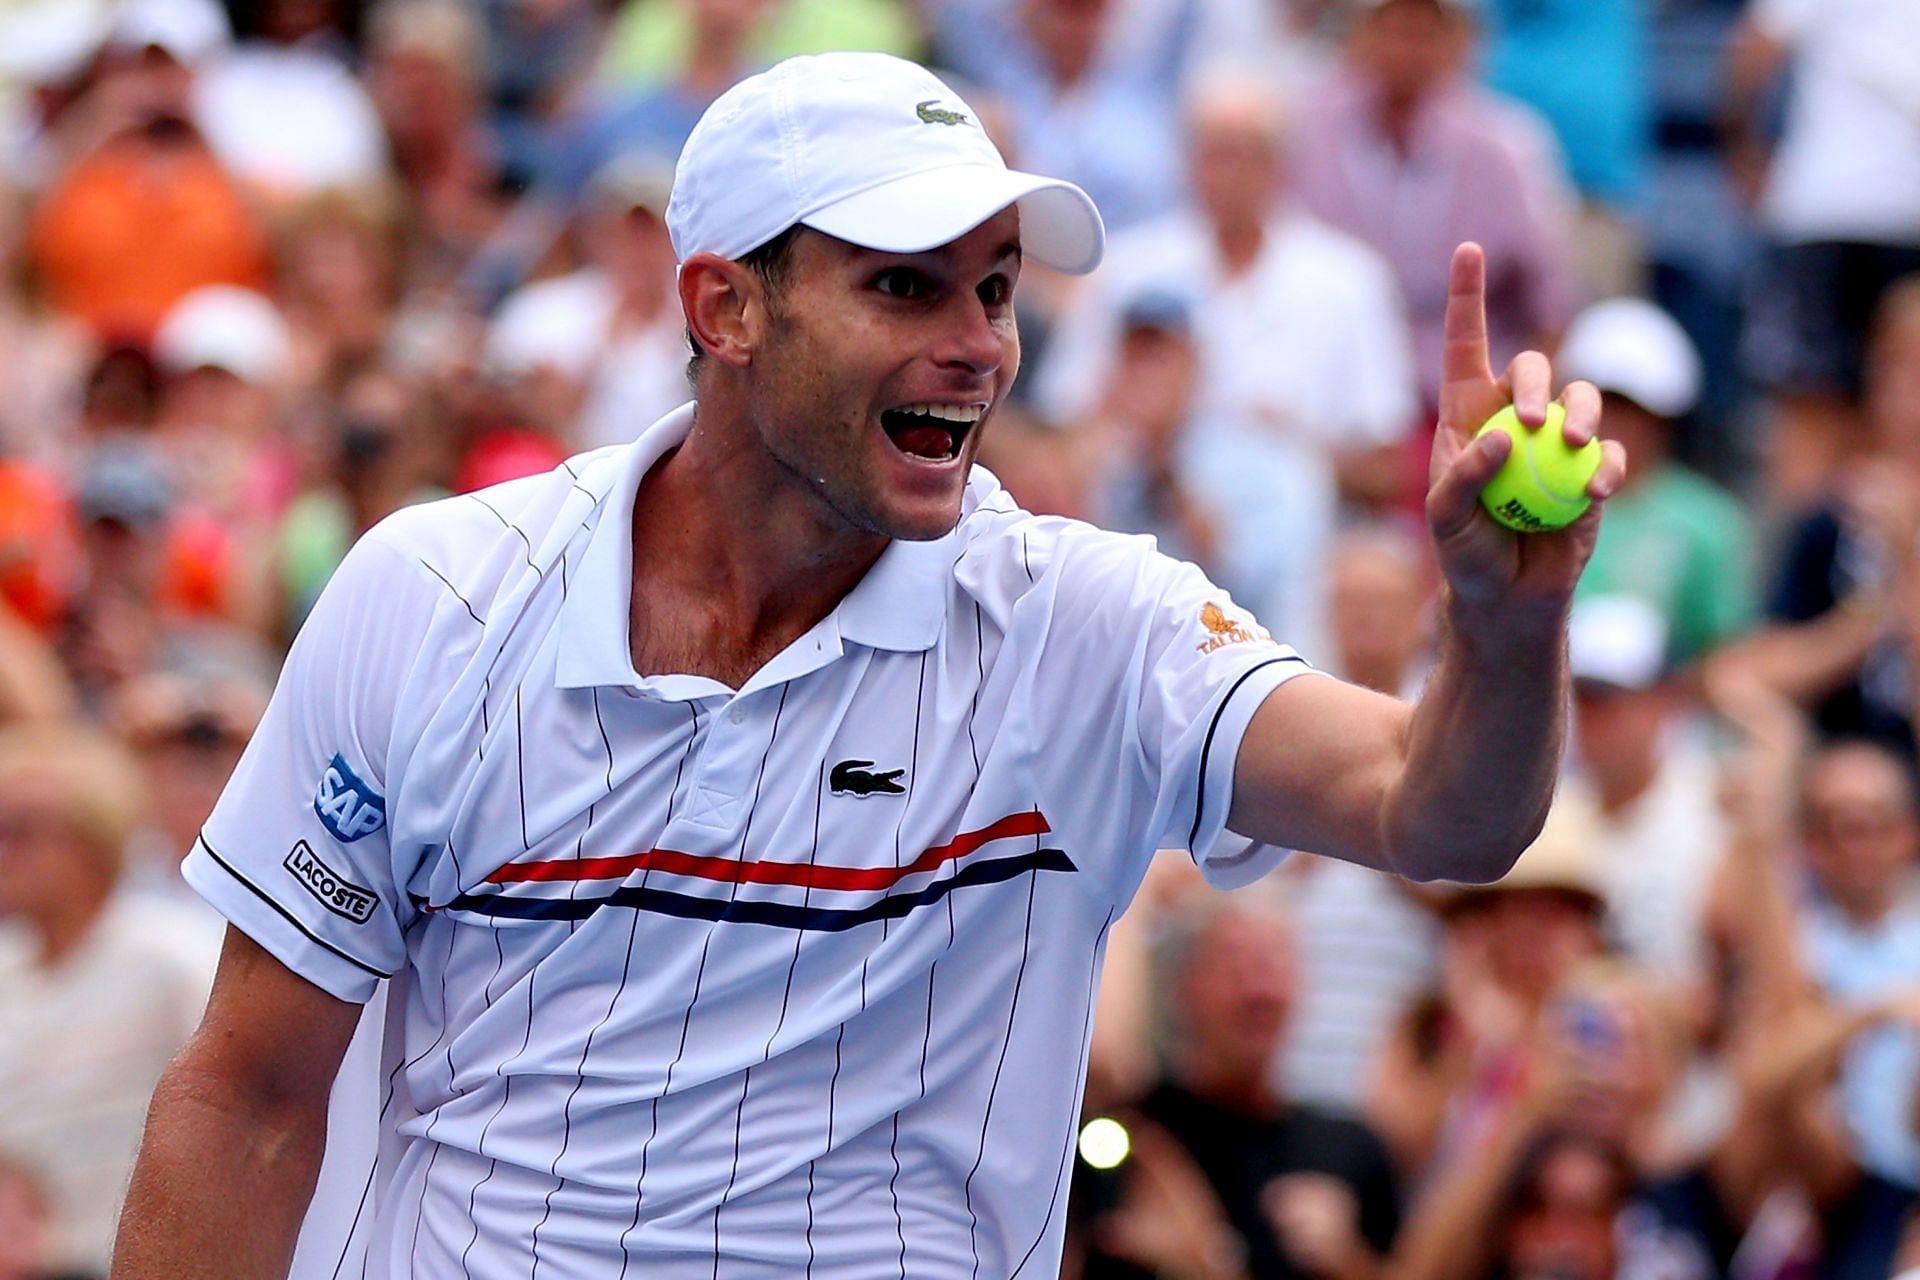 Andy Roddick at the 2012 US Open met Novak Djokovic nine times during his career.